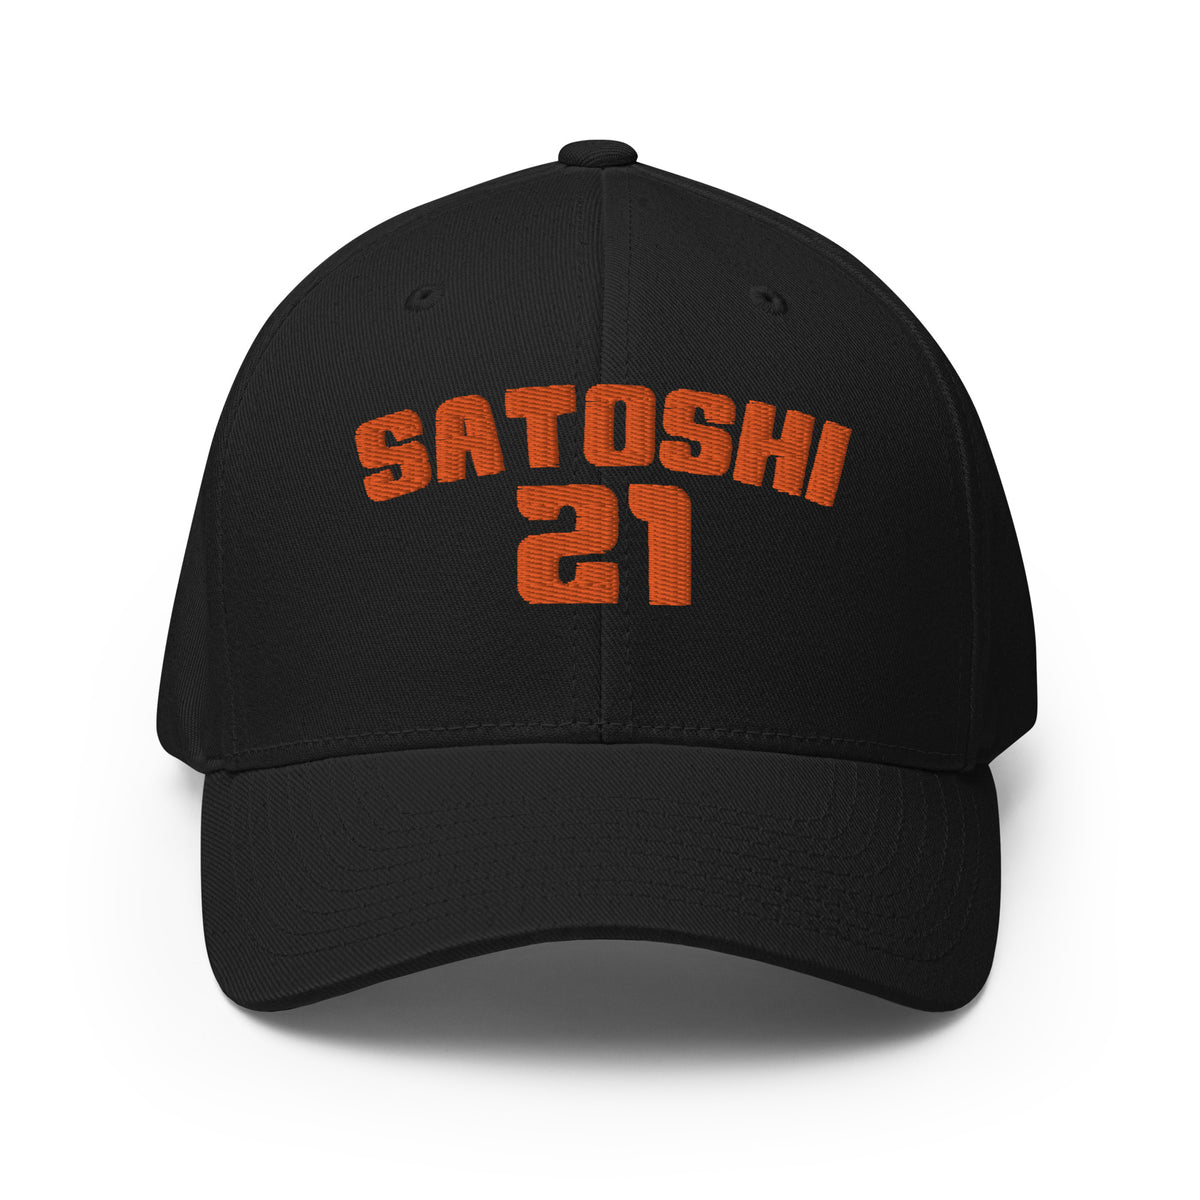 Satoshi 21 (Orange Embroidery) Bitcoin Flexfit Hat - fomo21